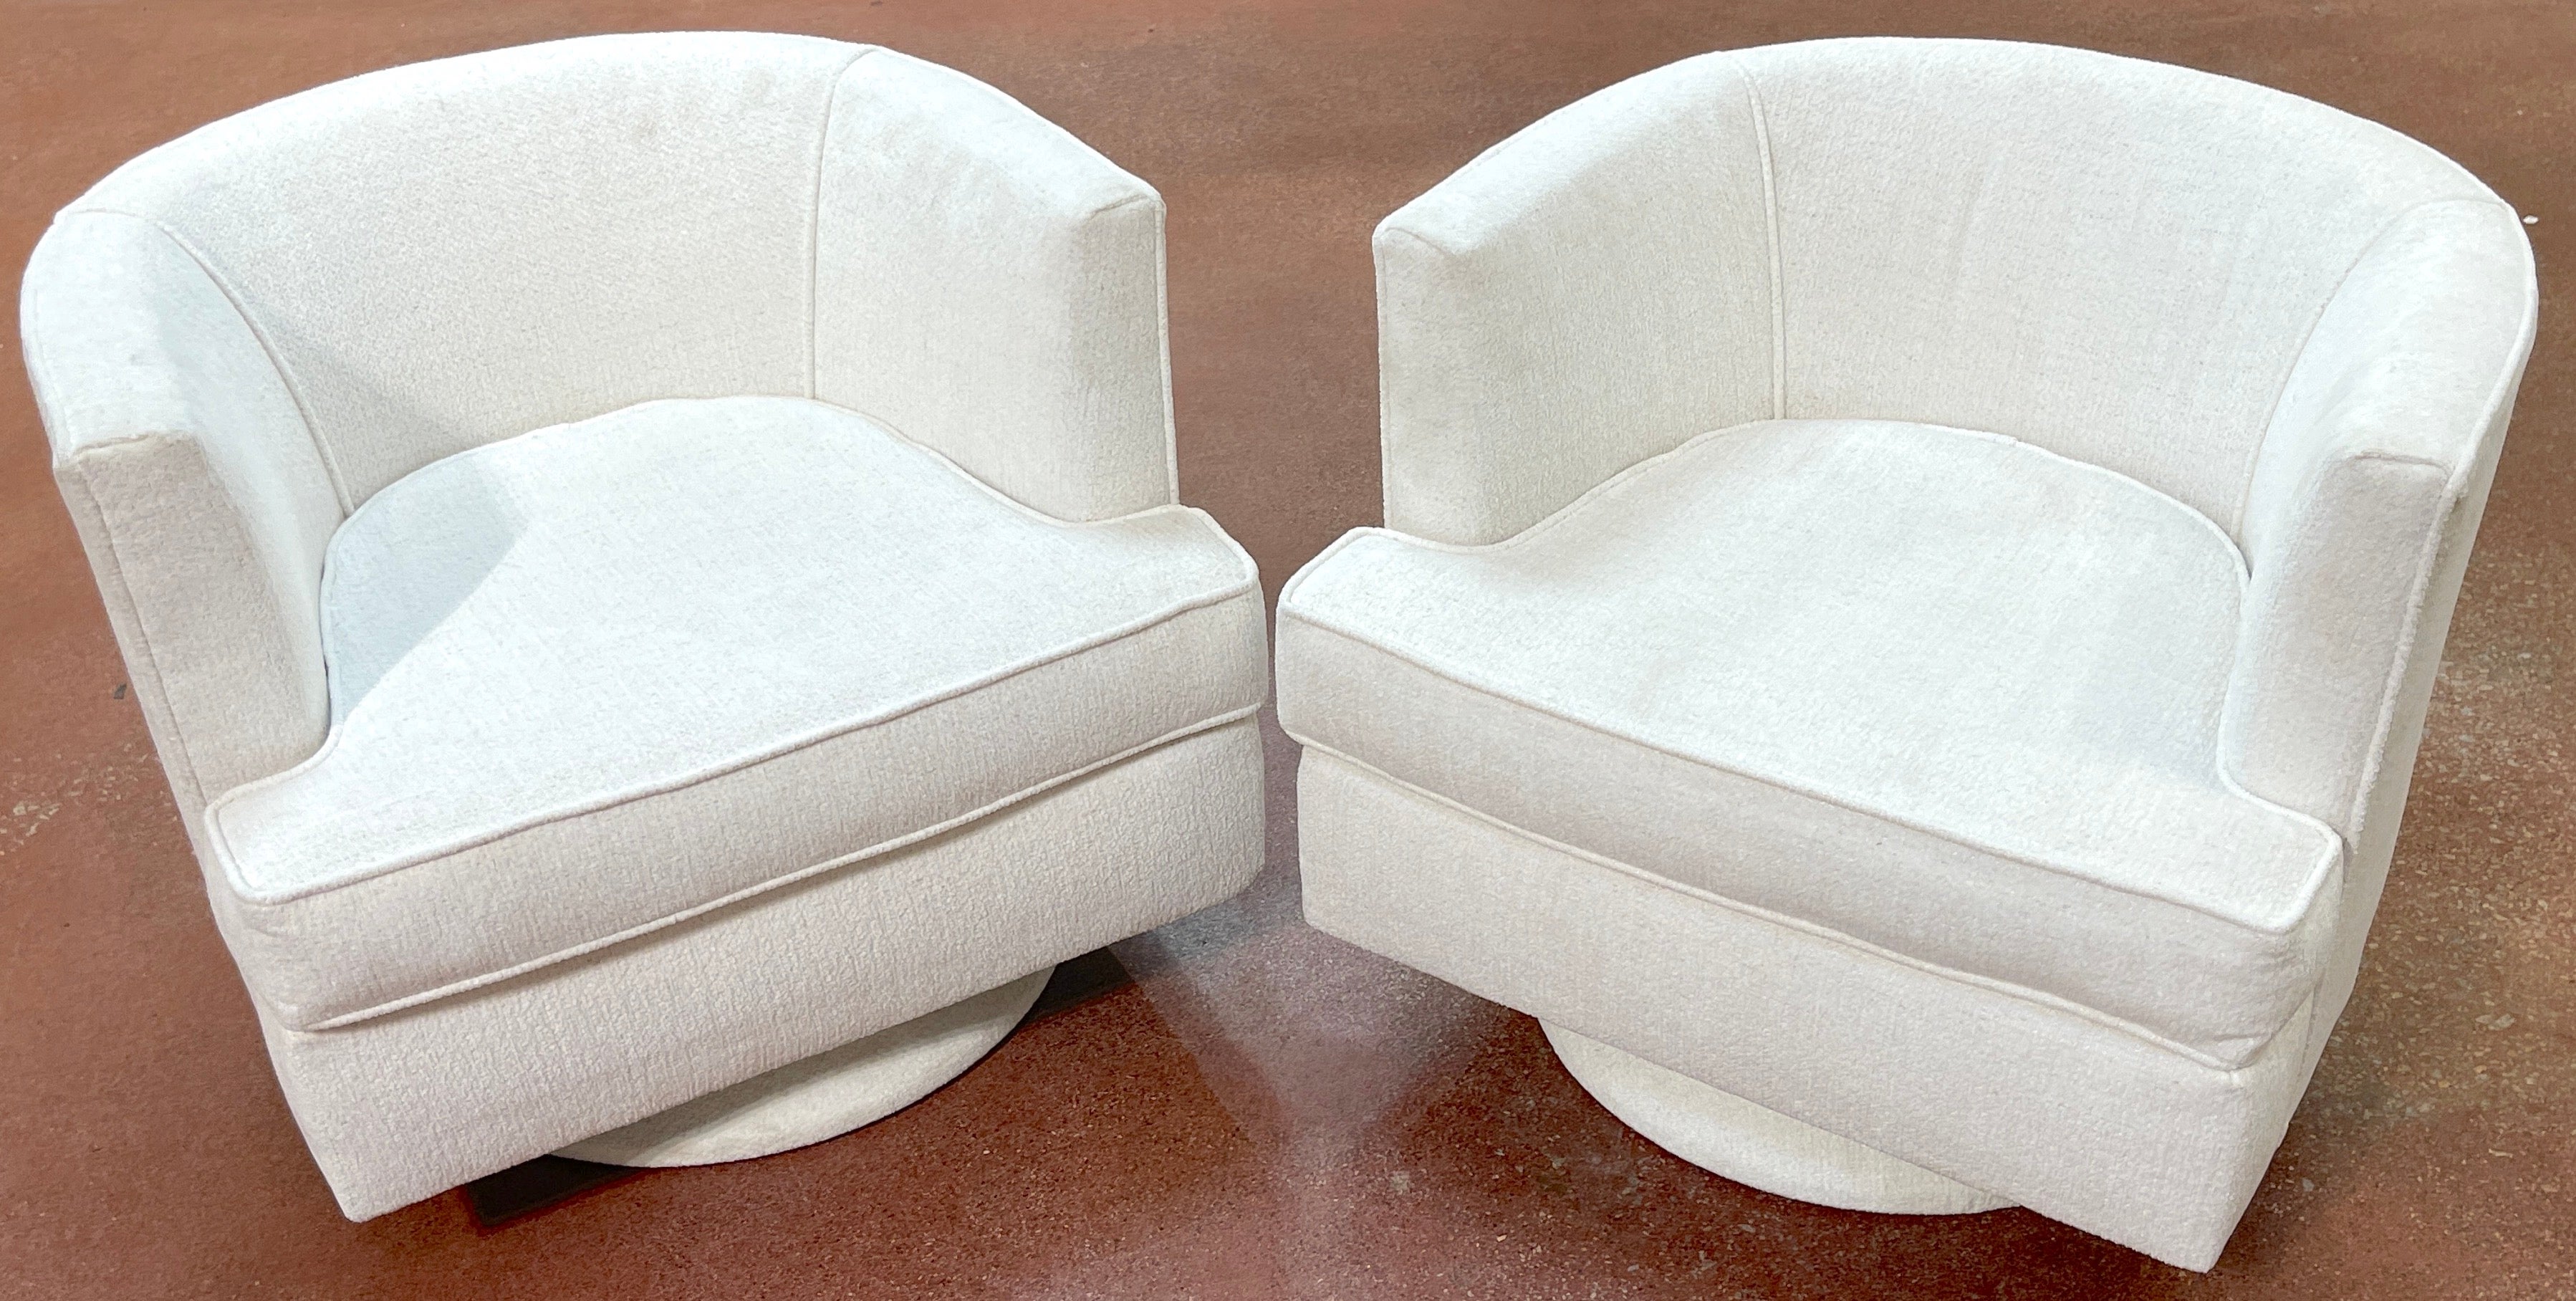 Pair of Sleek Mid-Century Modern Swivel Chairs Kravet White Boucle Fabric, C. 1970s
Style of Milo Baughman, USA, 1970s

A stunning pair of sleek Mid-Century modern swivel chairs, the design is of iconic style of Milo Baughman from the 1970s. These